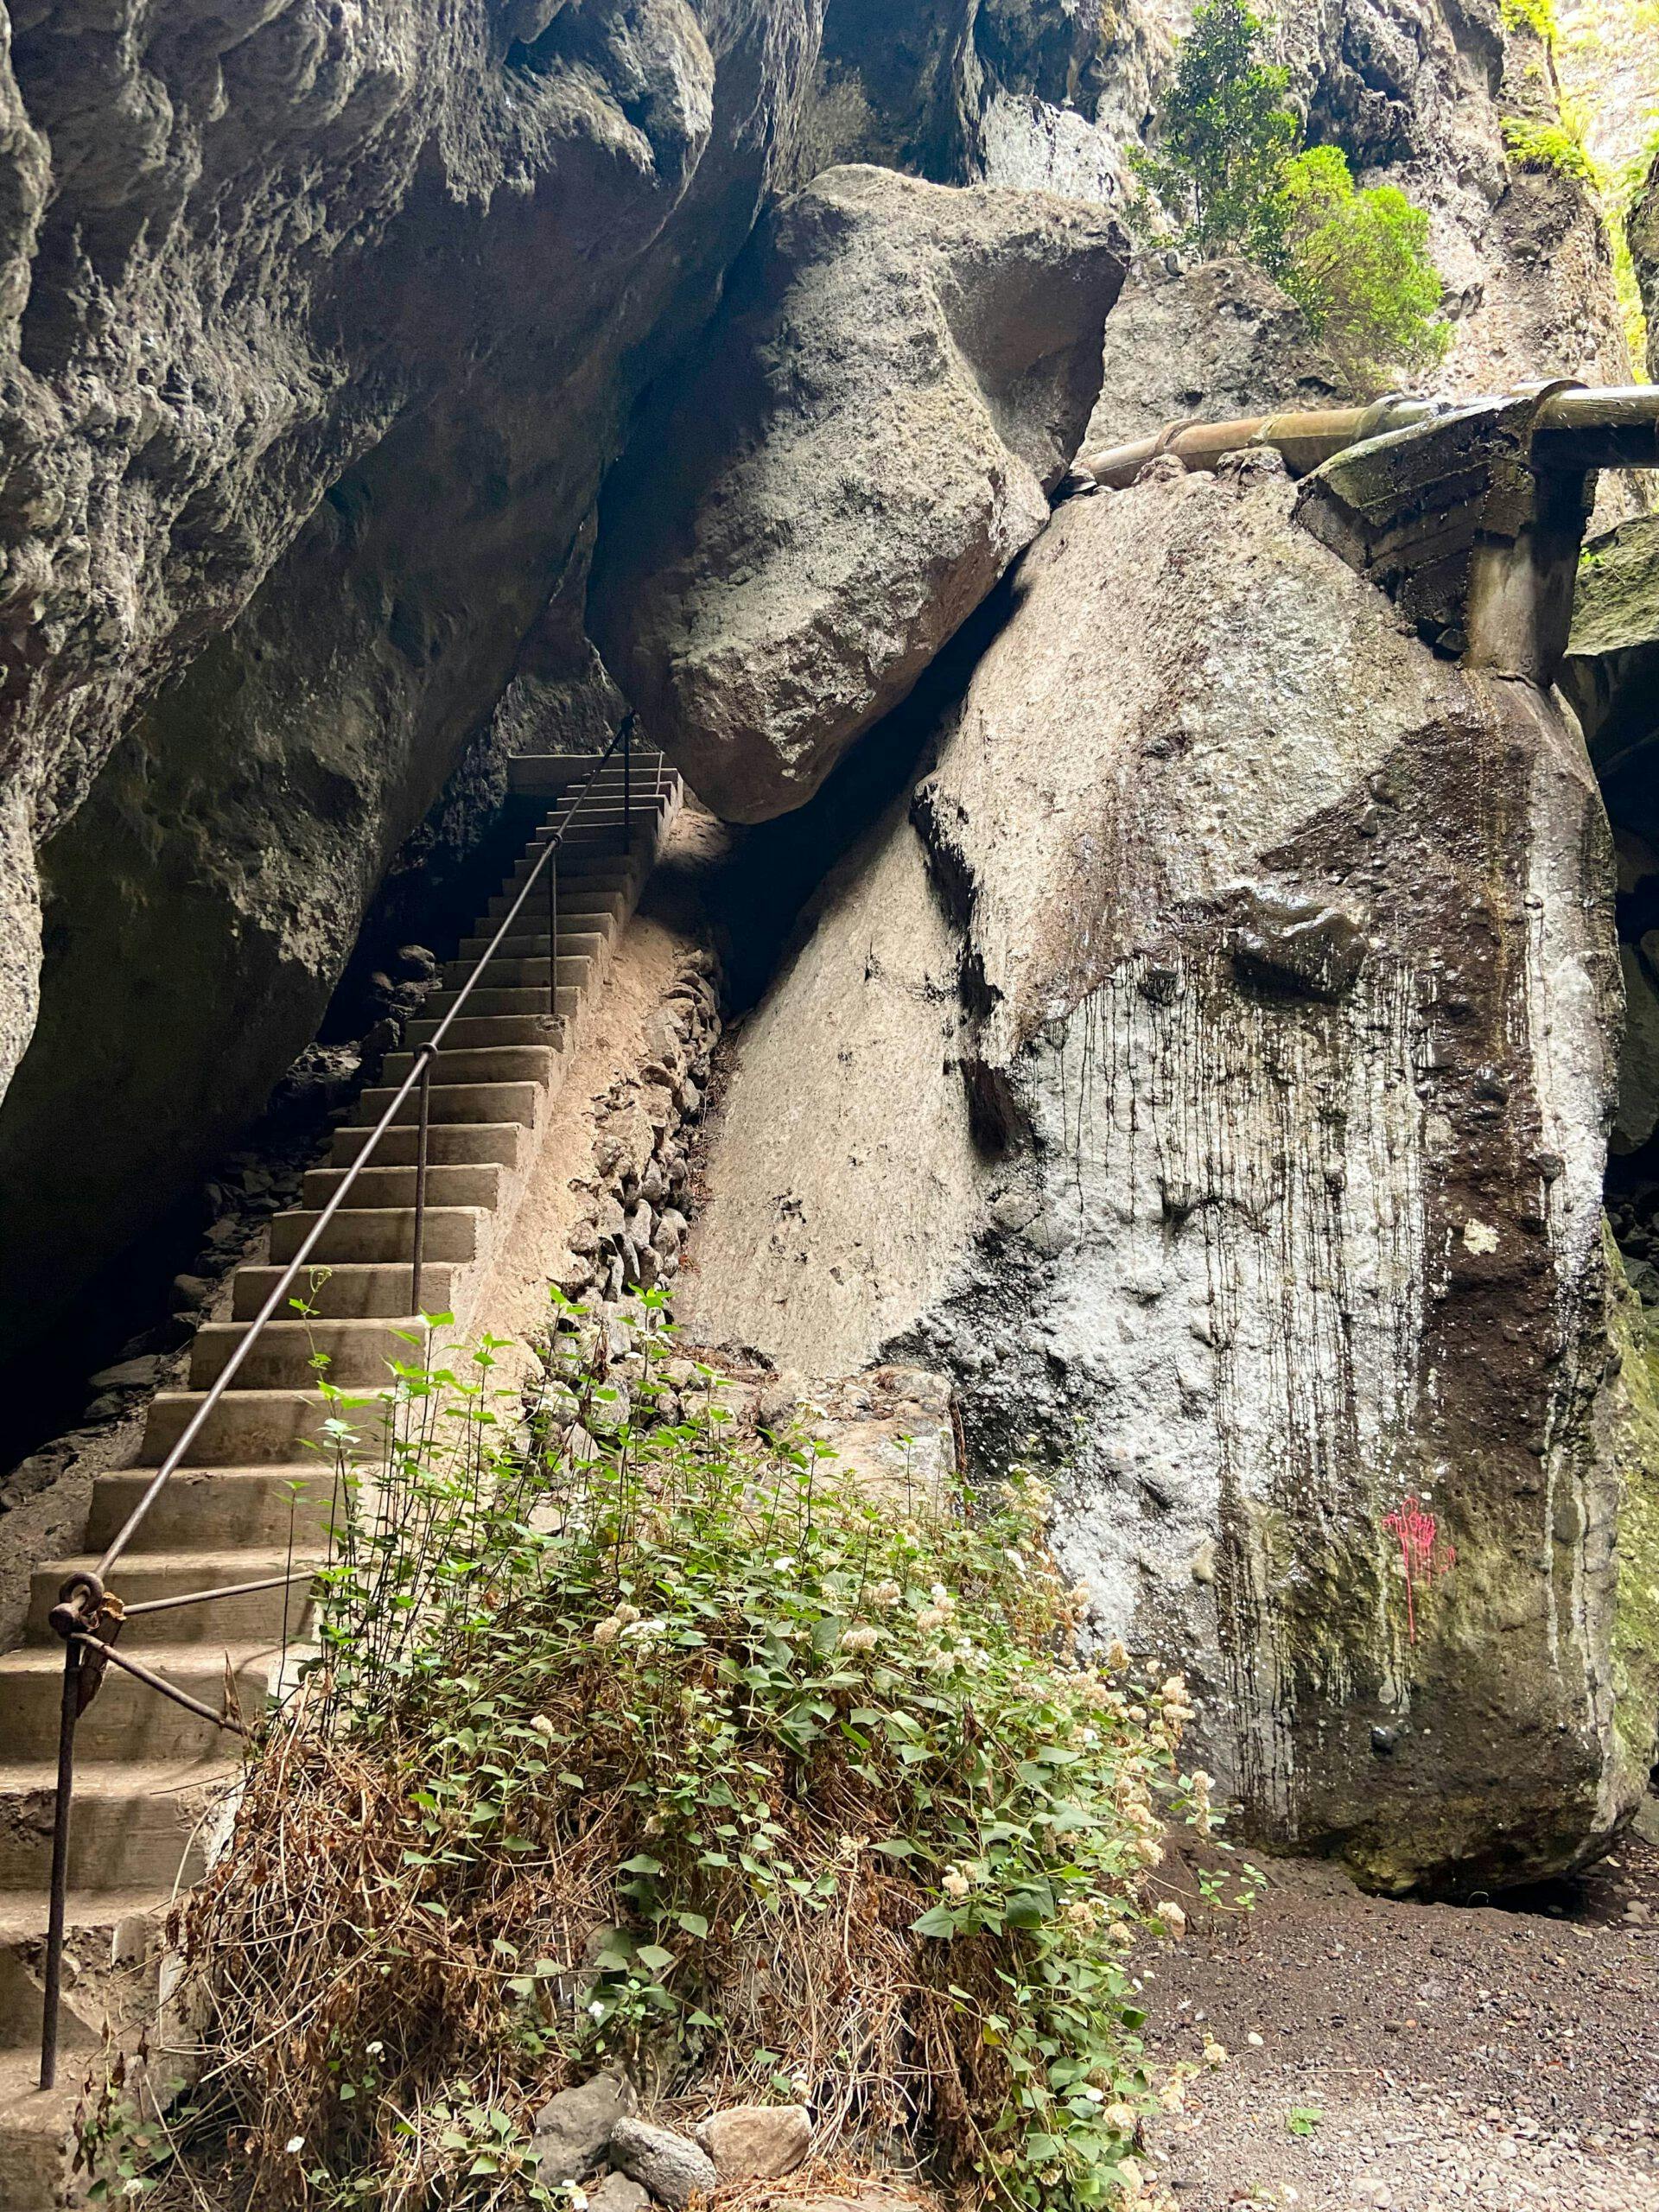 Barranco de los Cochinos – an adventurous hike through a wild gorge